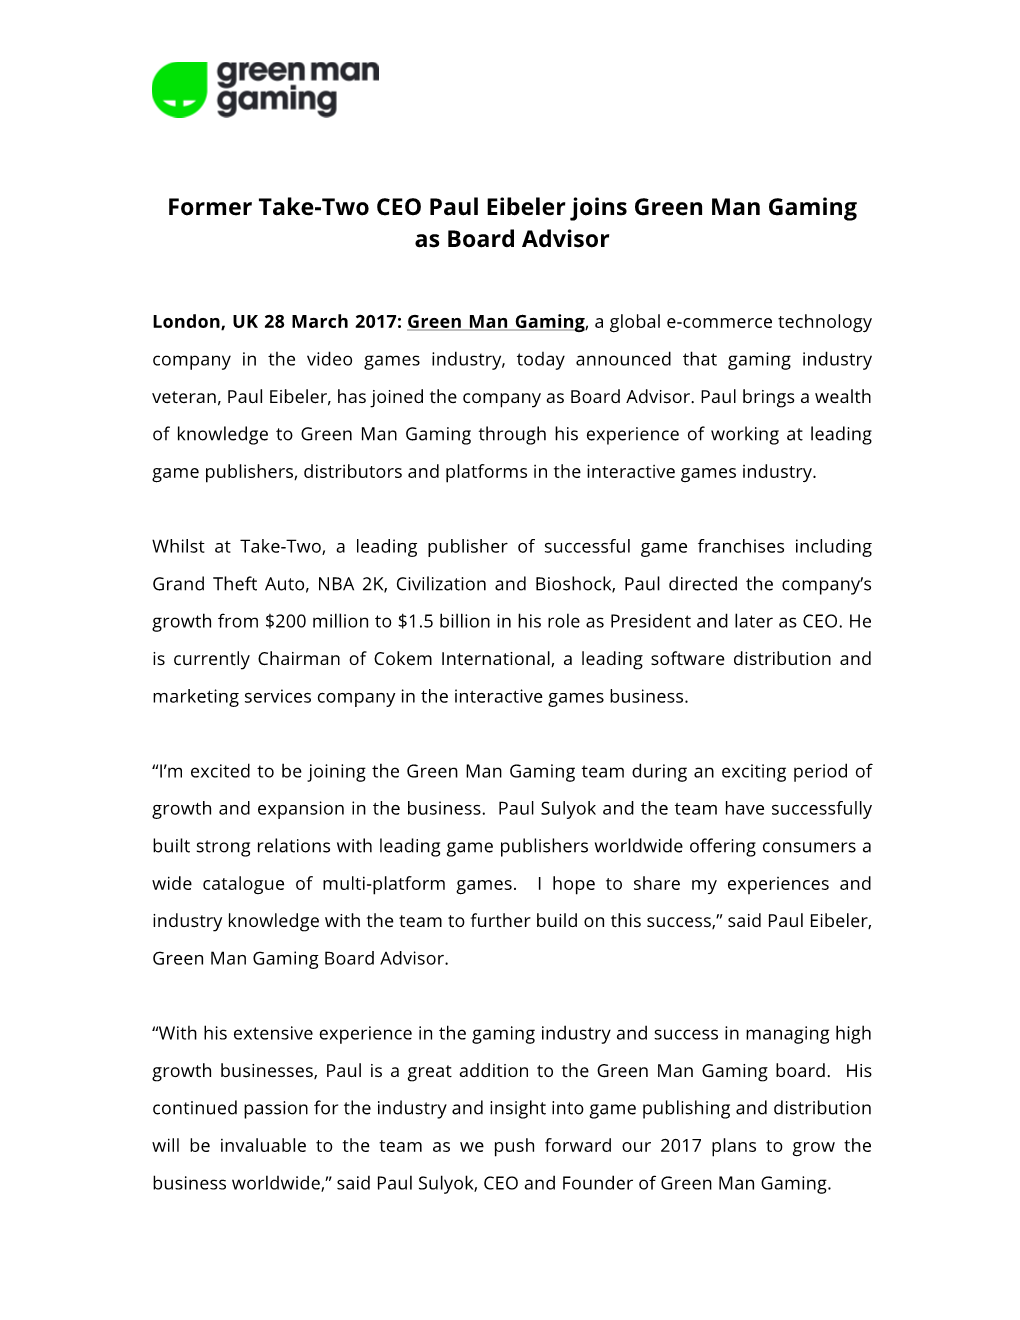 Former Take-Two CEO Paul Eibeler Joins Green Man Gaming As Board Advisor